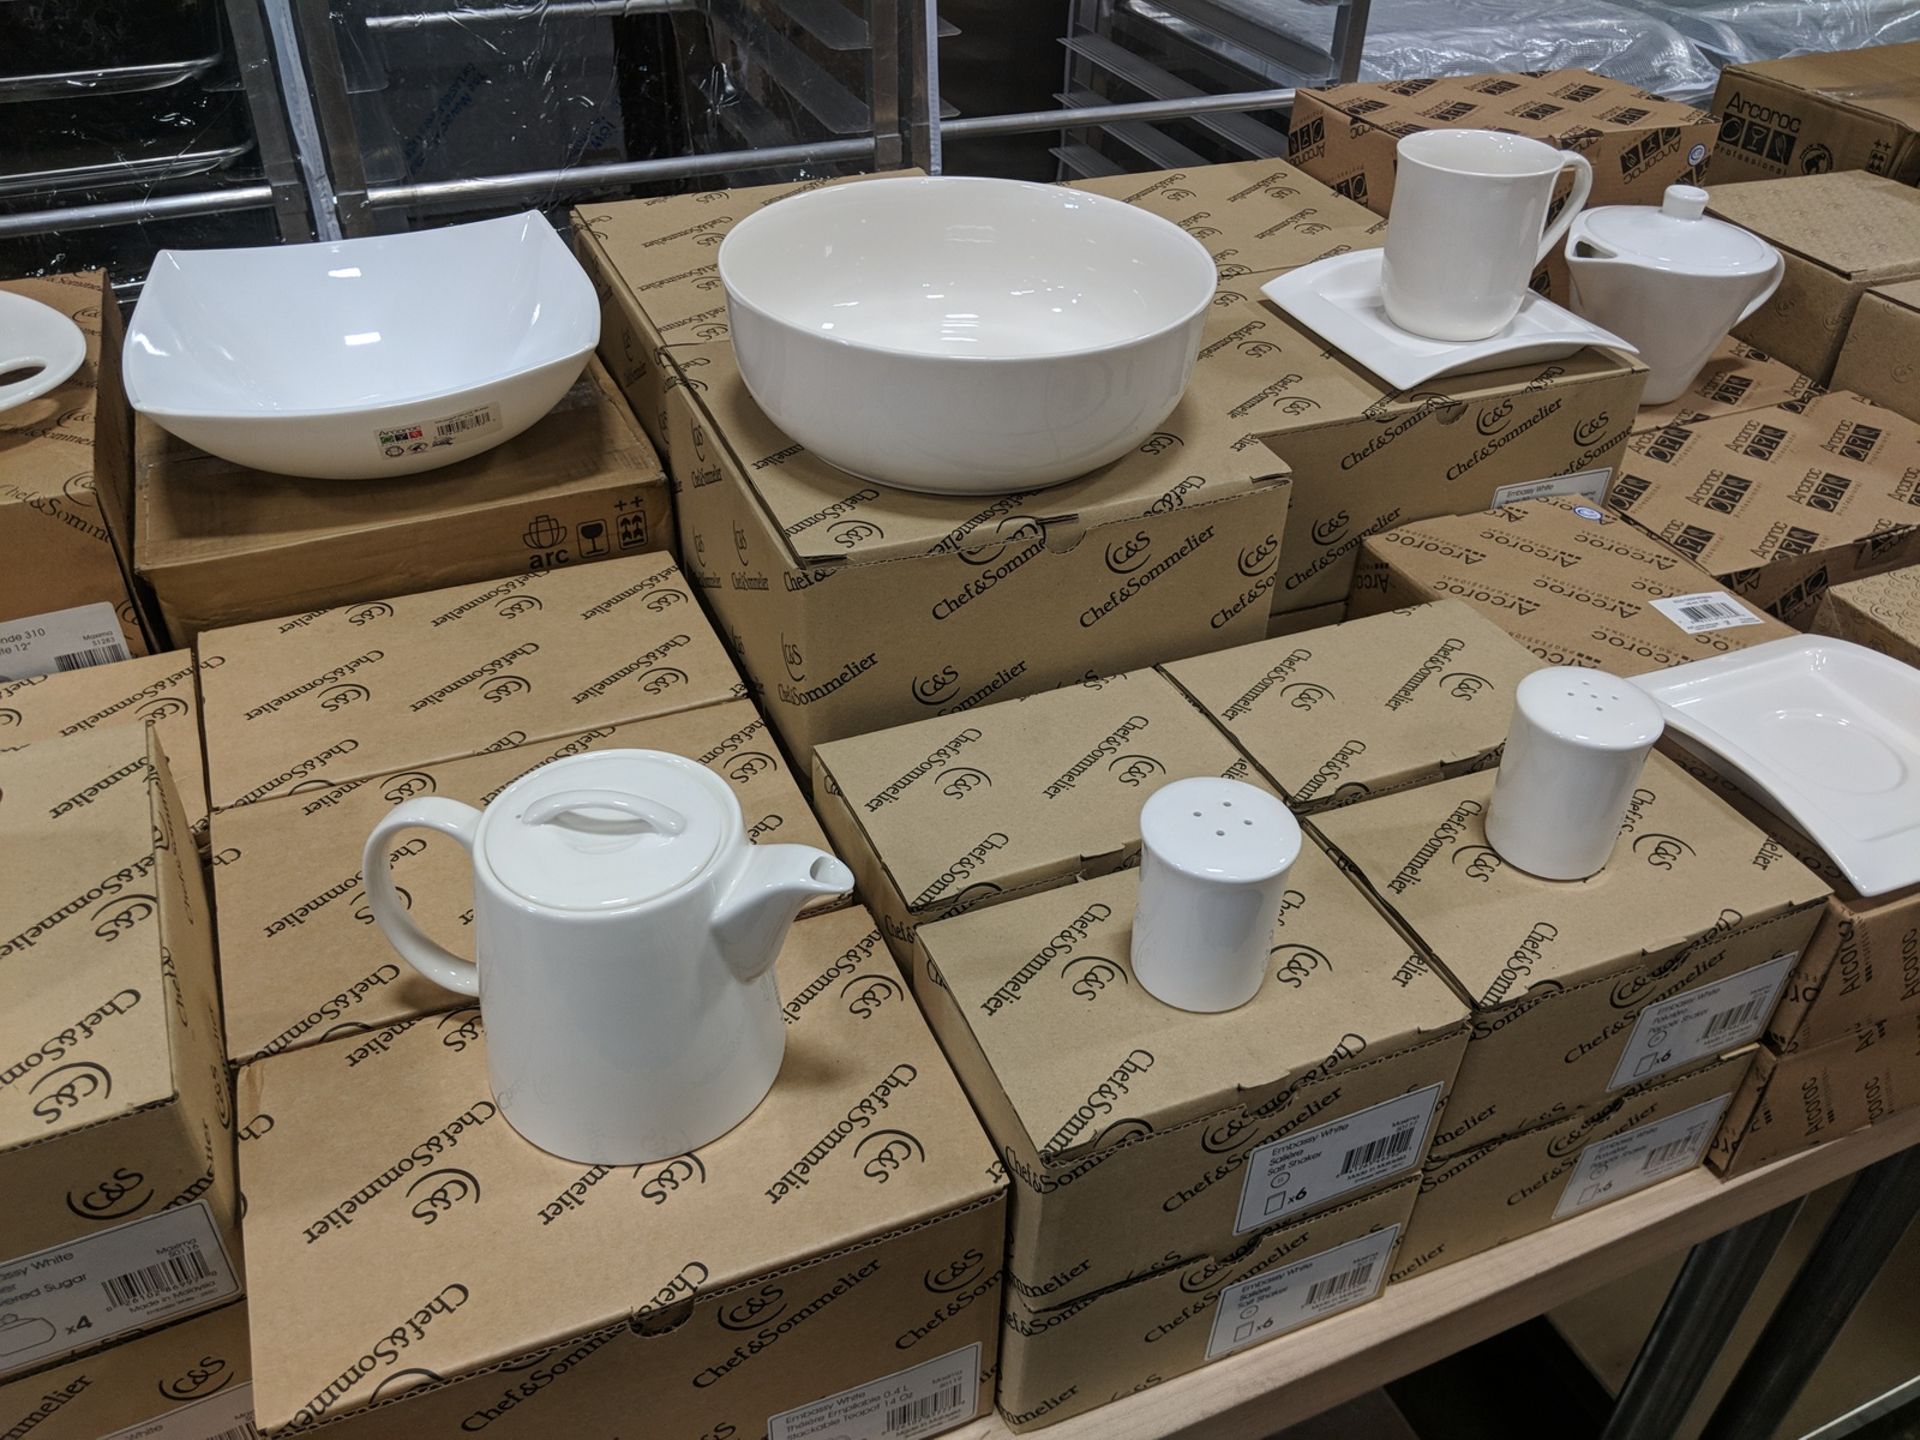 60oz/1800ml White Porcelain Bowls, Arcoroc "Embassy" S0147 - Lot of 4 - Image 3 of 3